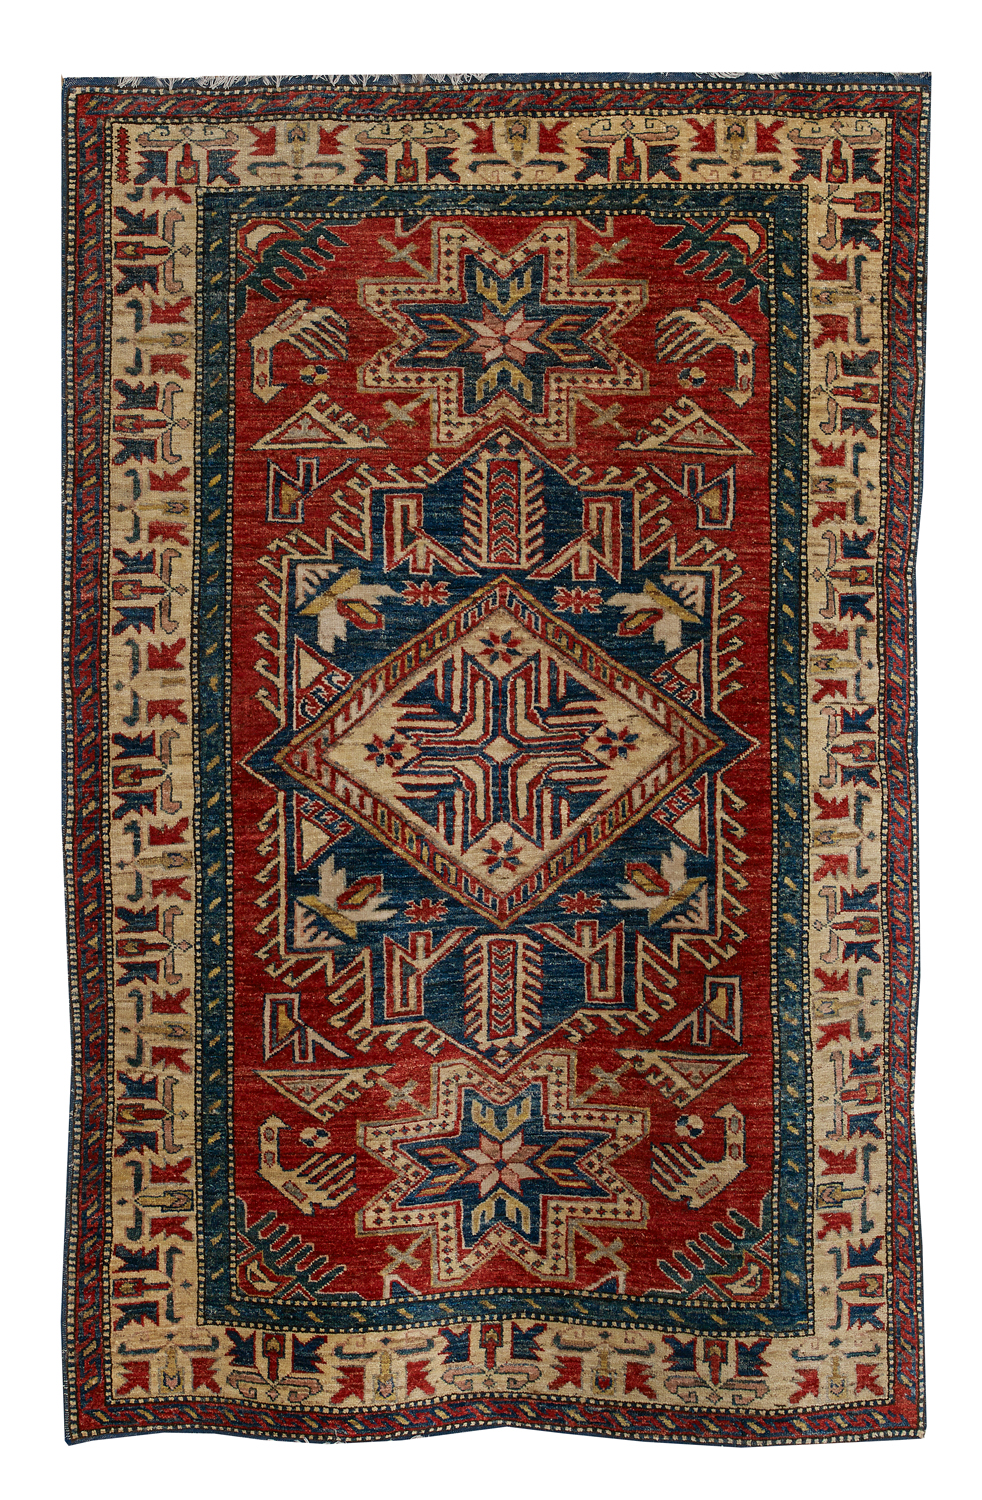 Two Uzbek Kazak Carpets - Image 3 of 3